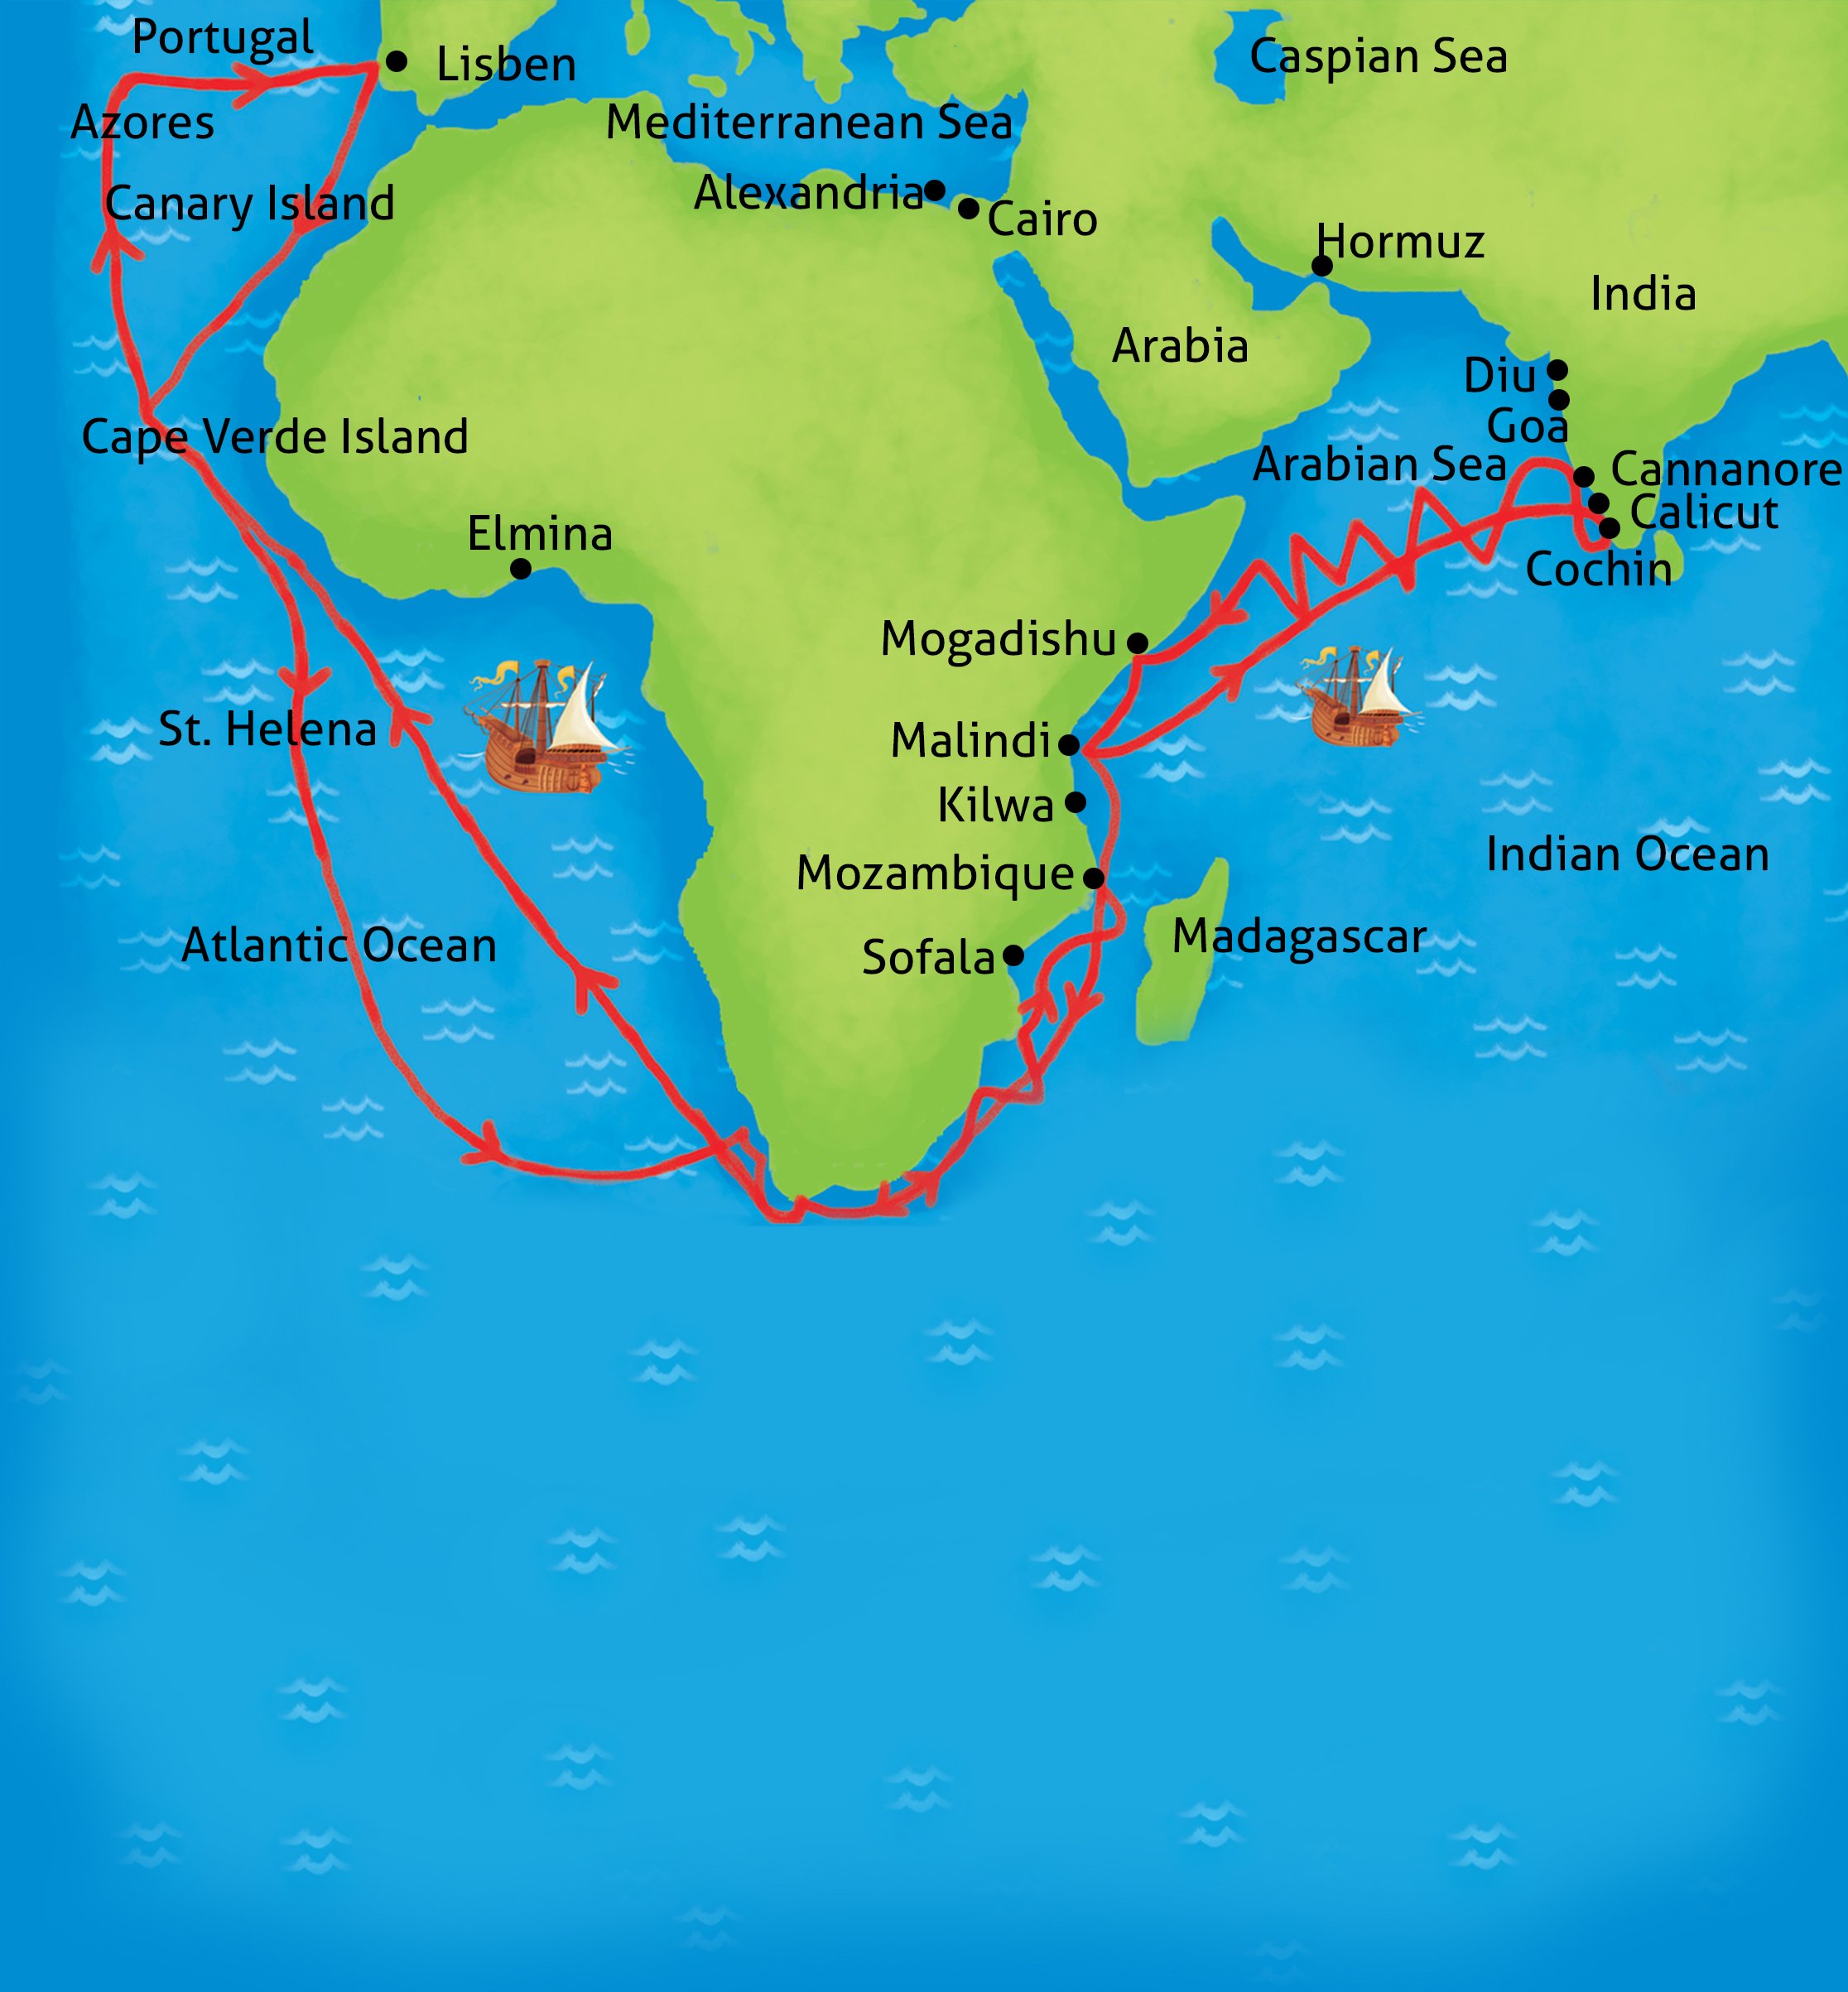 what continent did vasco da gama sail around to reach india